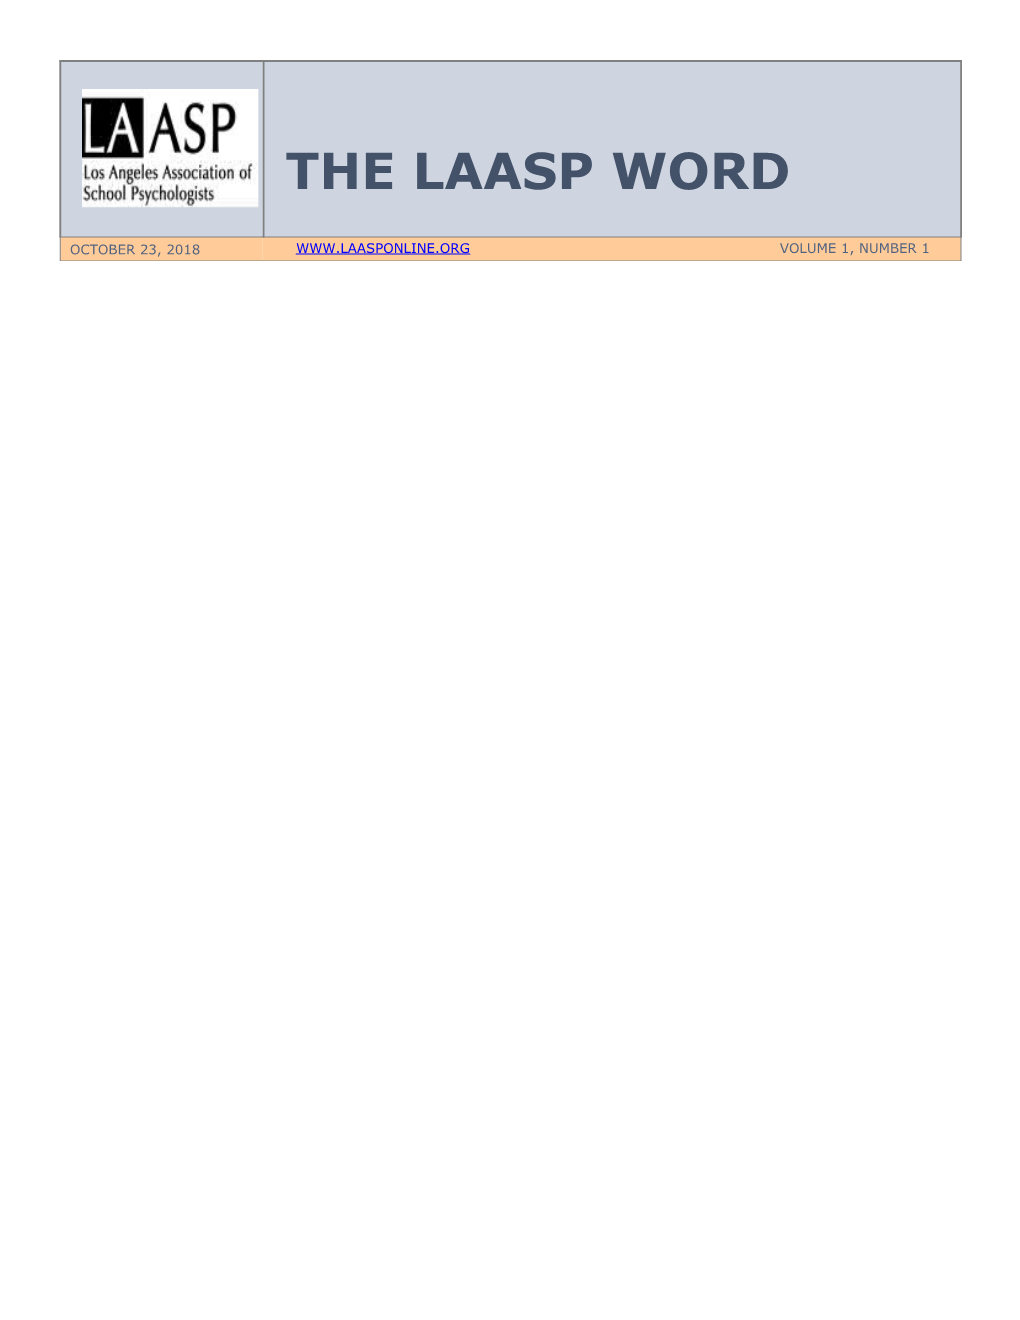 The Laasp Word